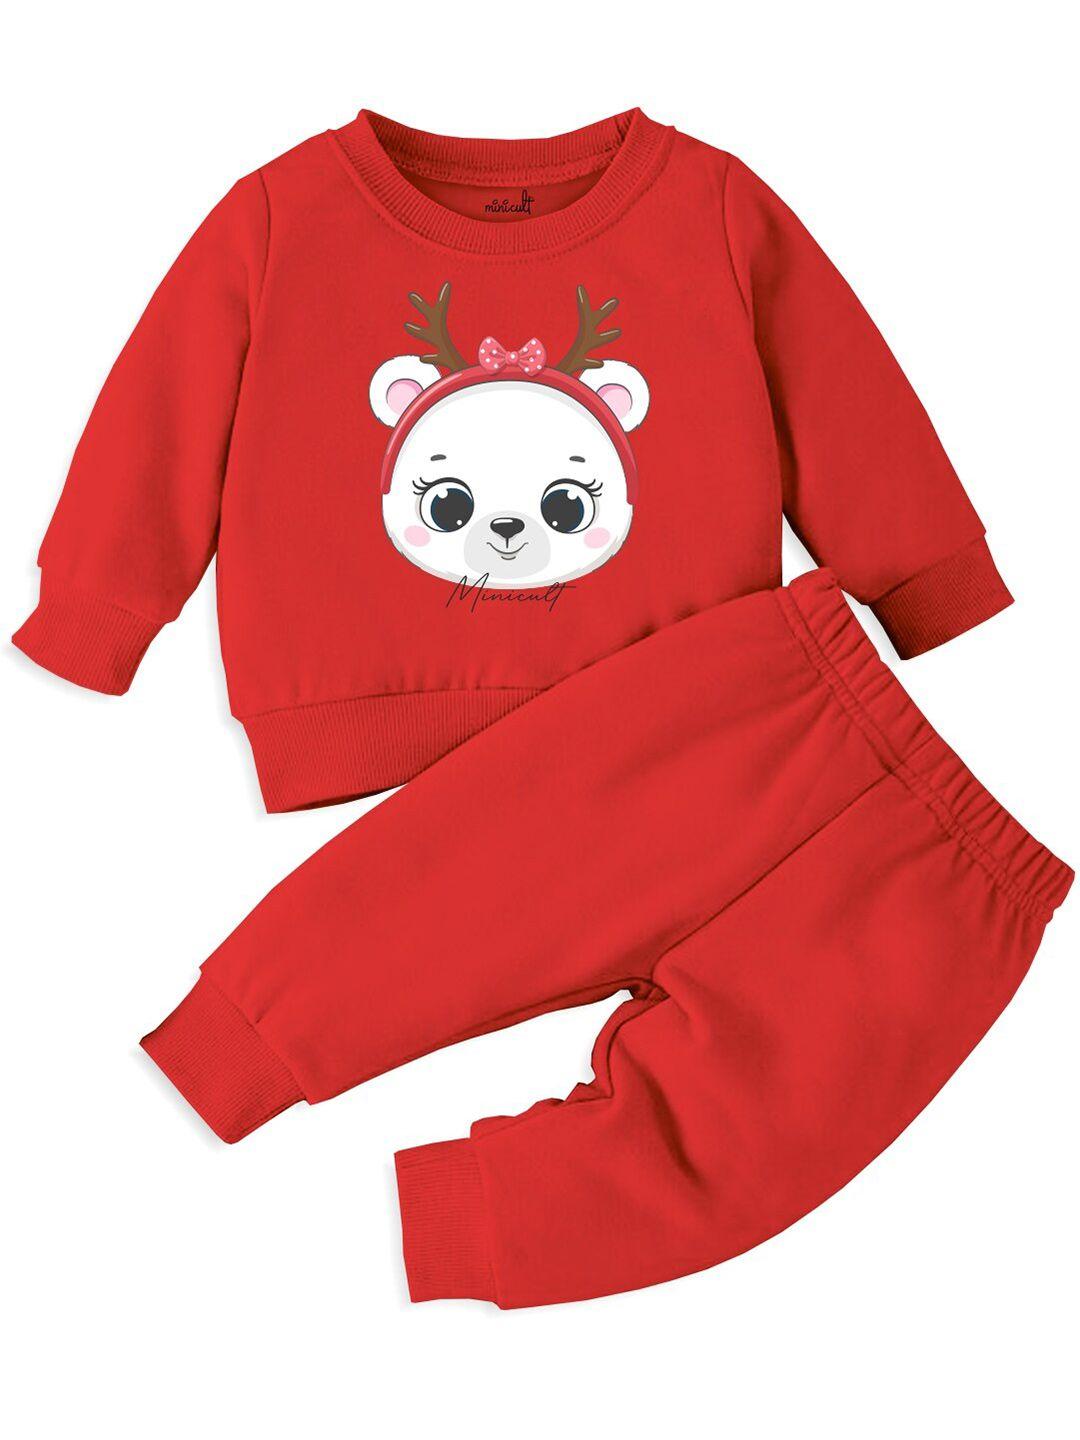 x2o unisex kids red printed t-shirt with pyjamas